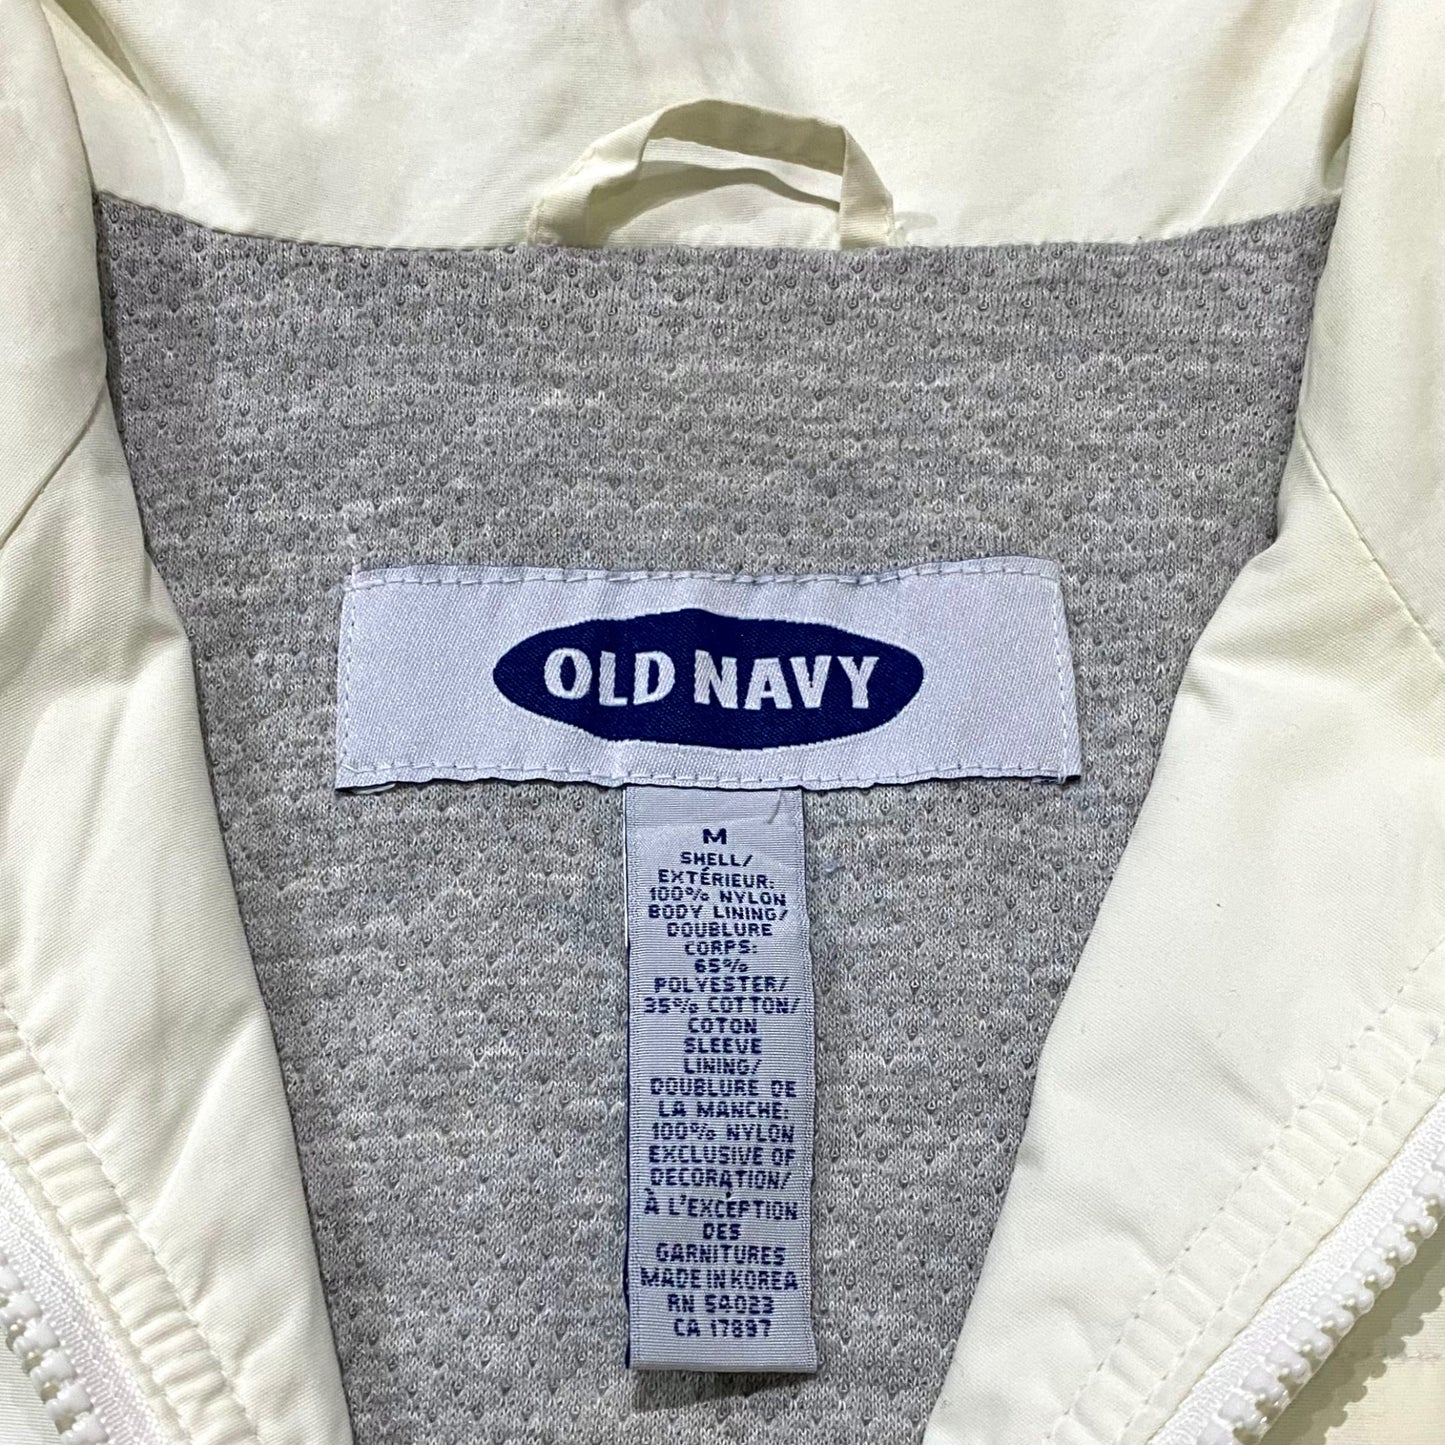 "OLD NAVY" High-neck jacket